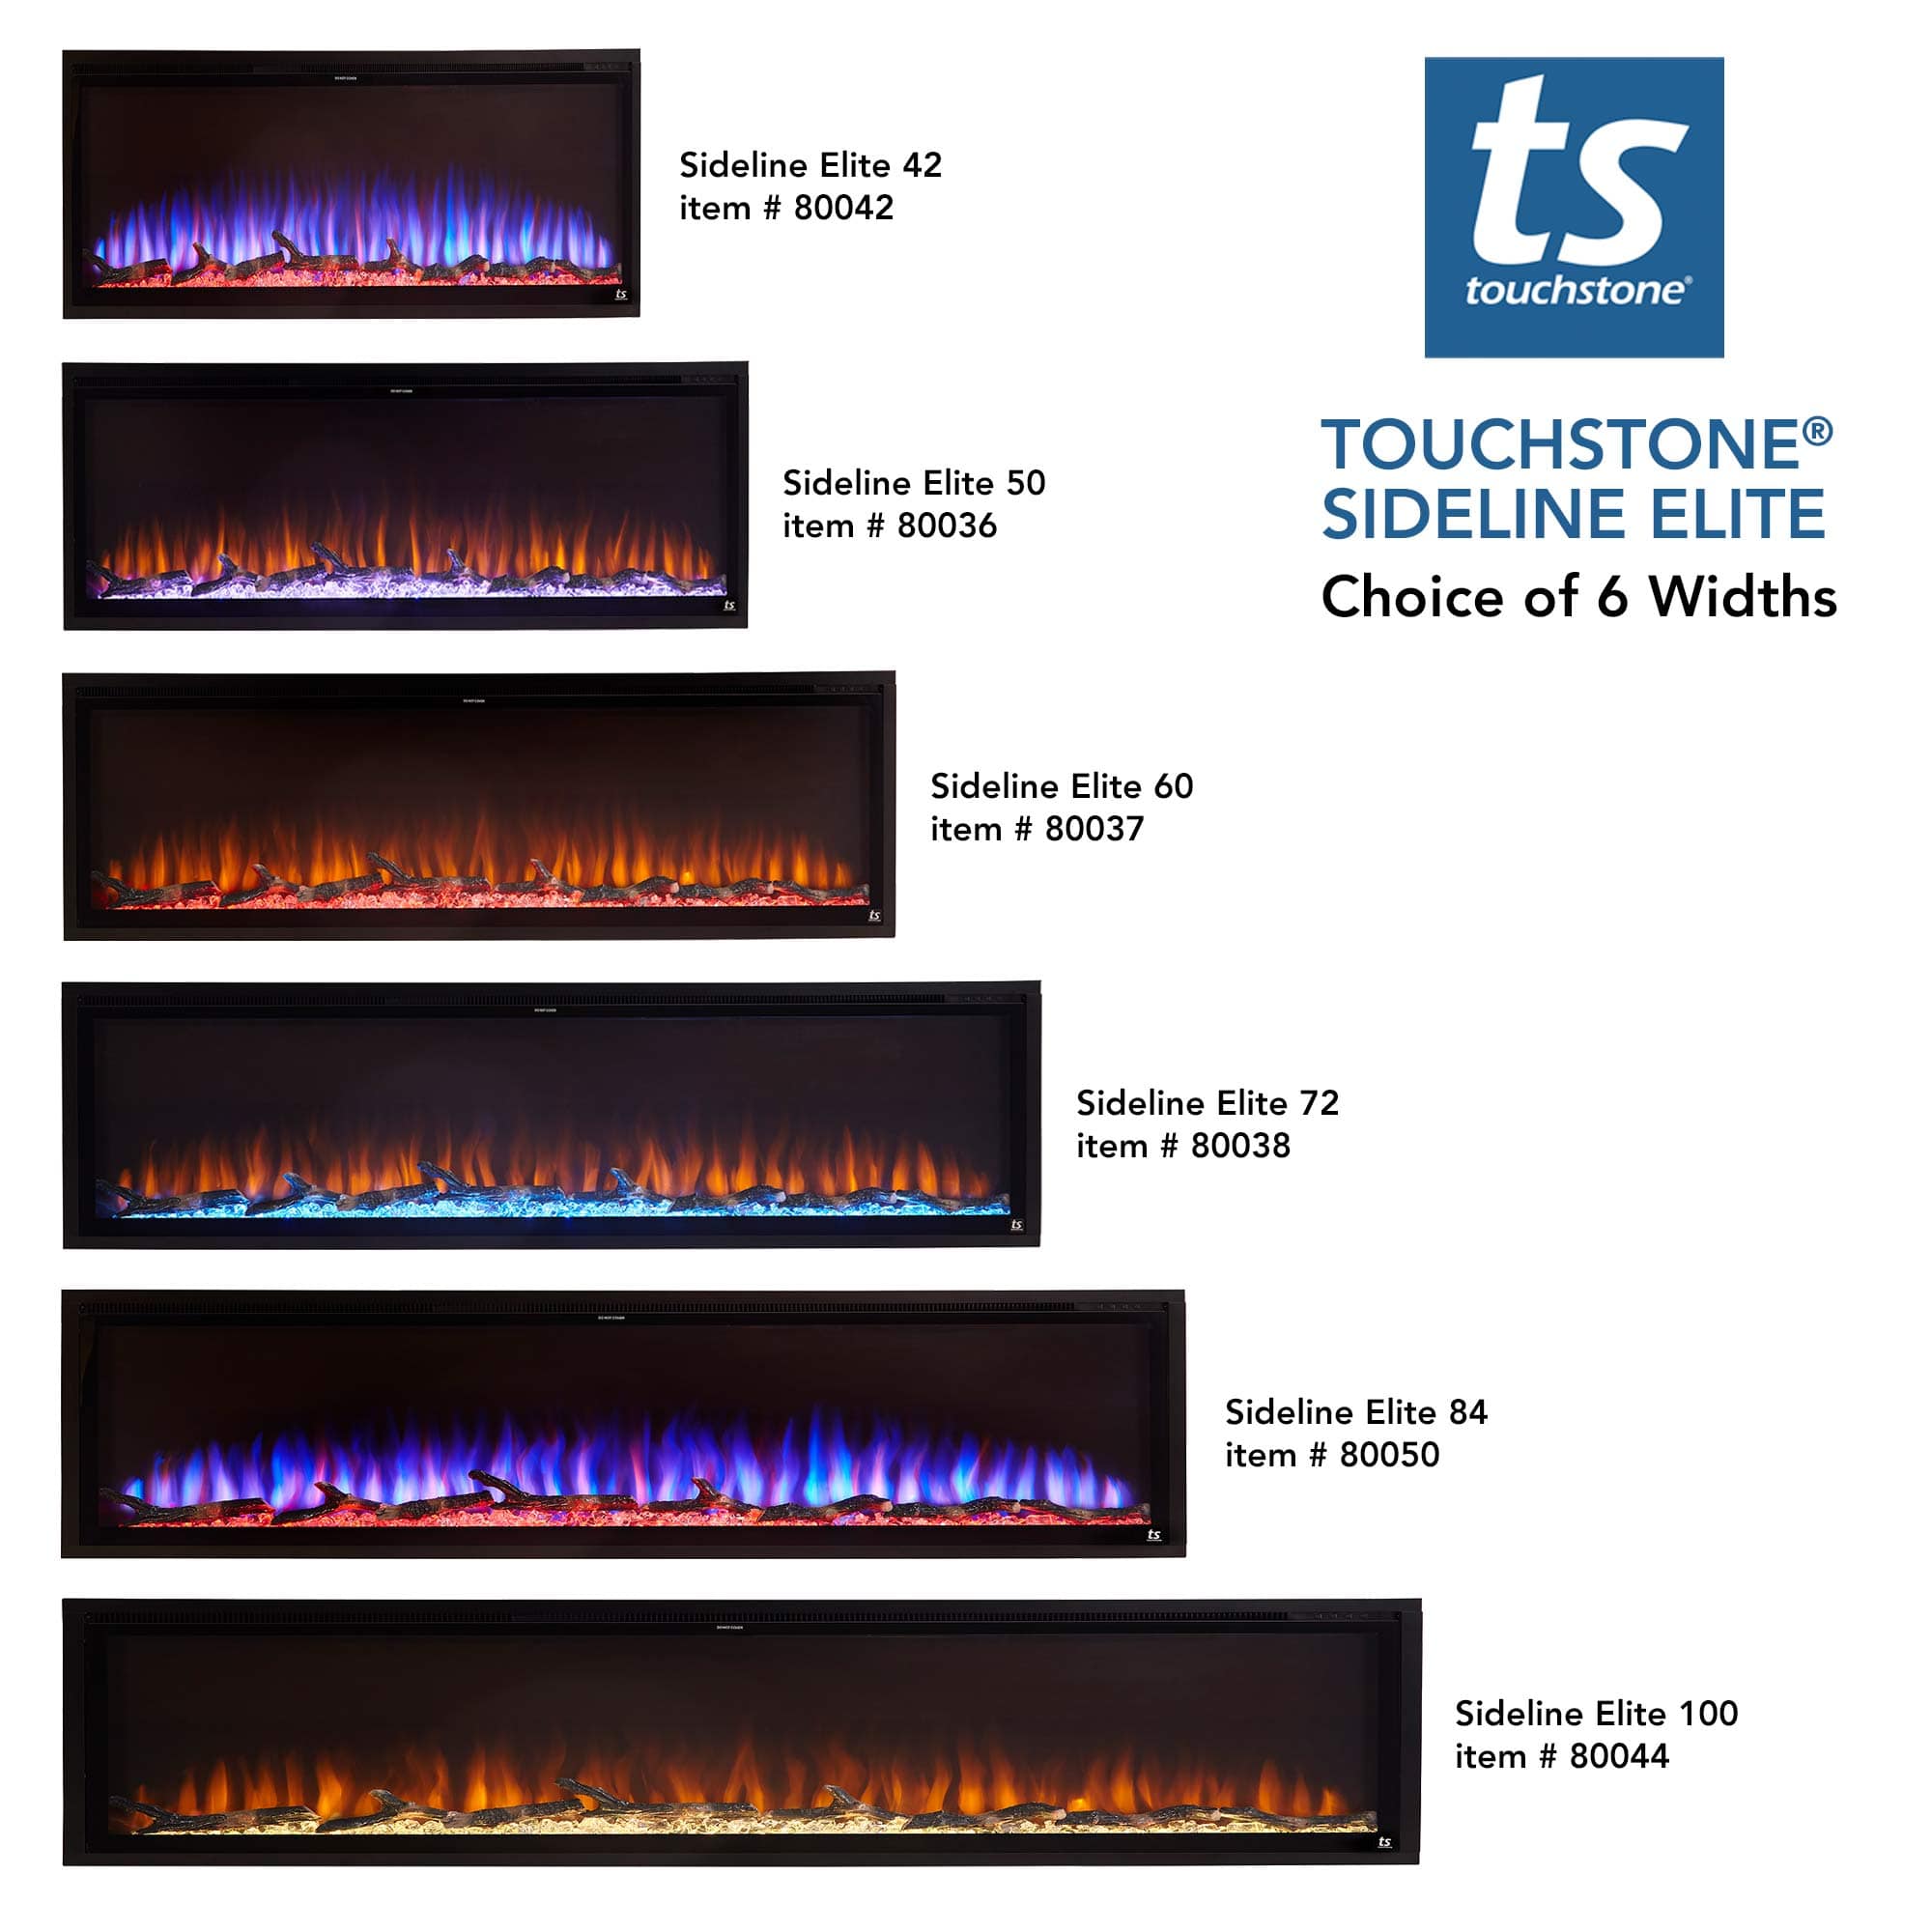 Touchstone Sideline Elite Smart Electric Fireplace optional widths